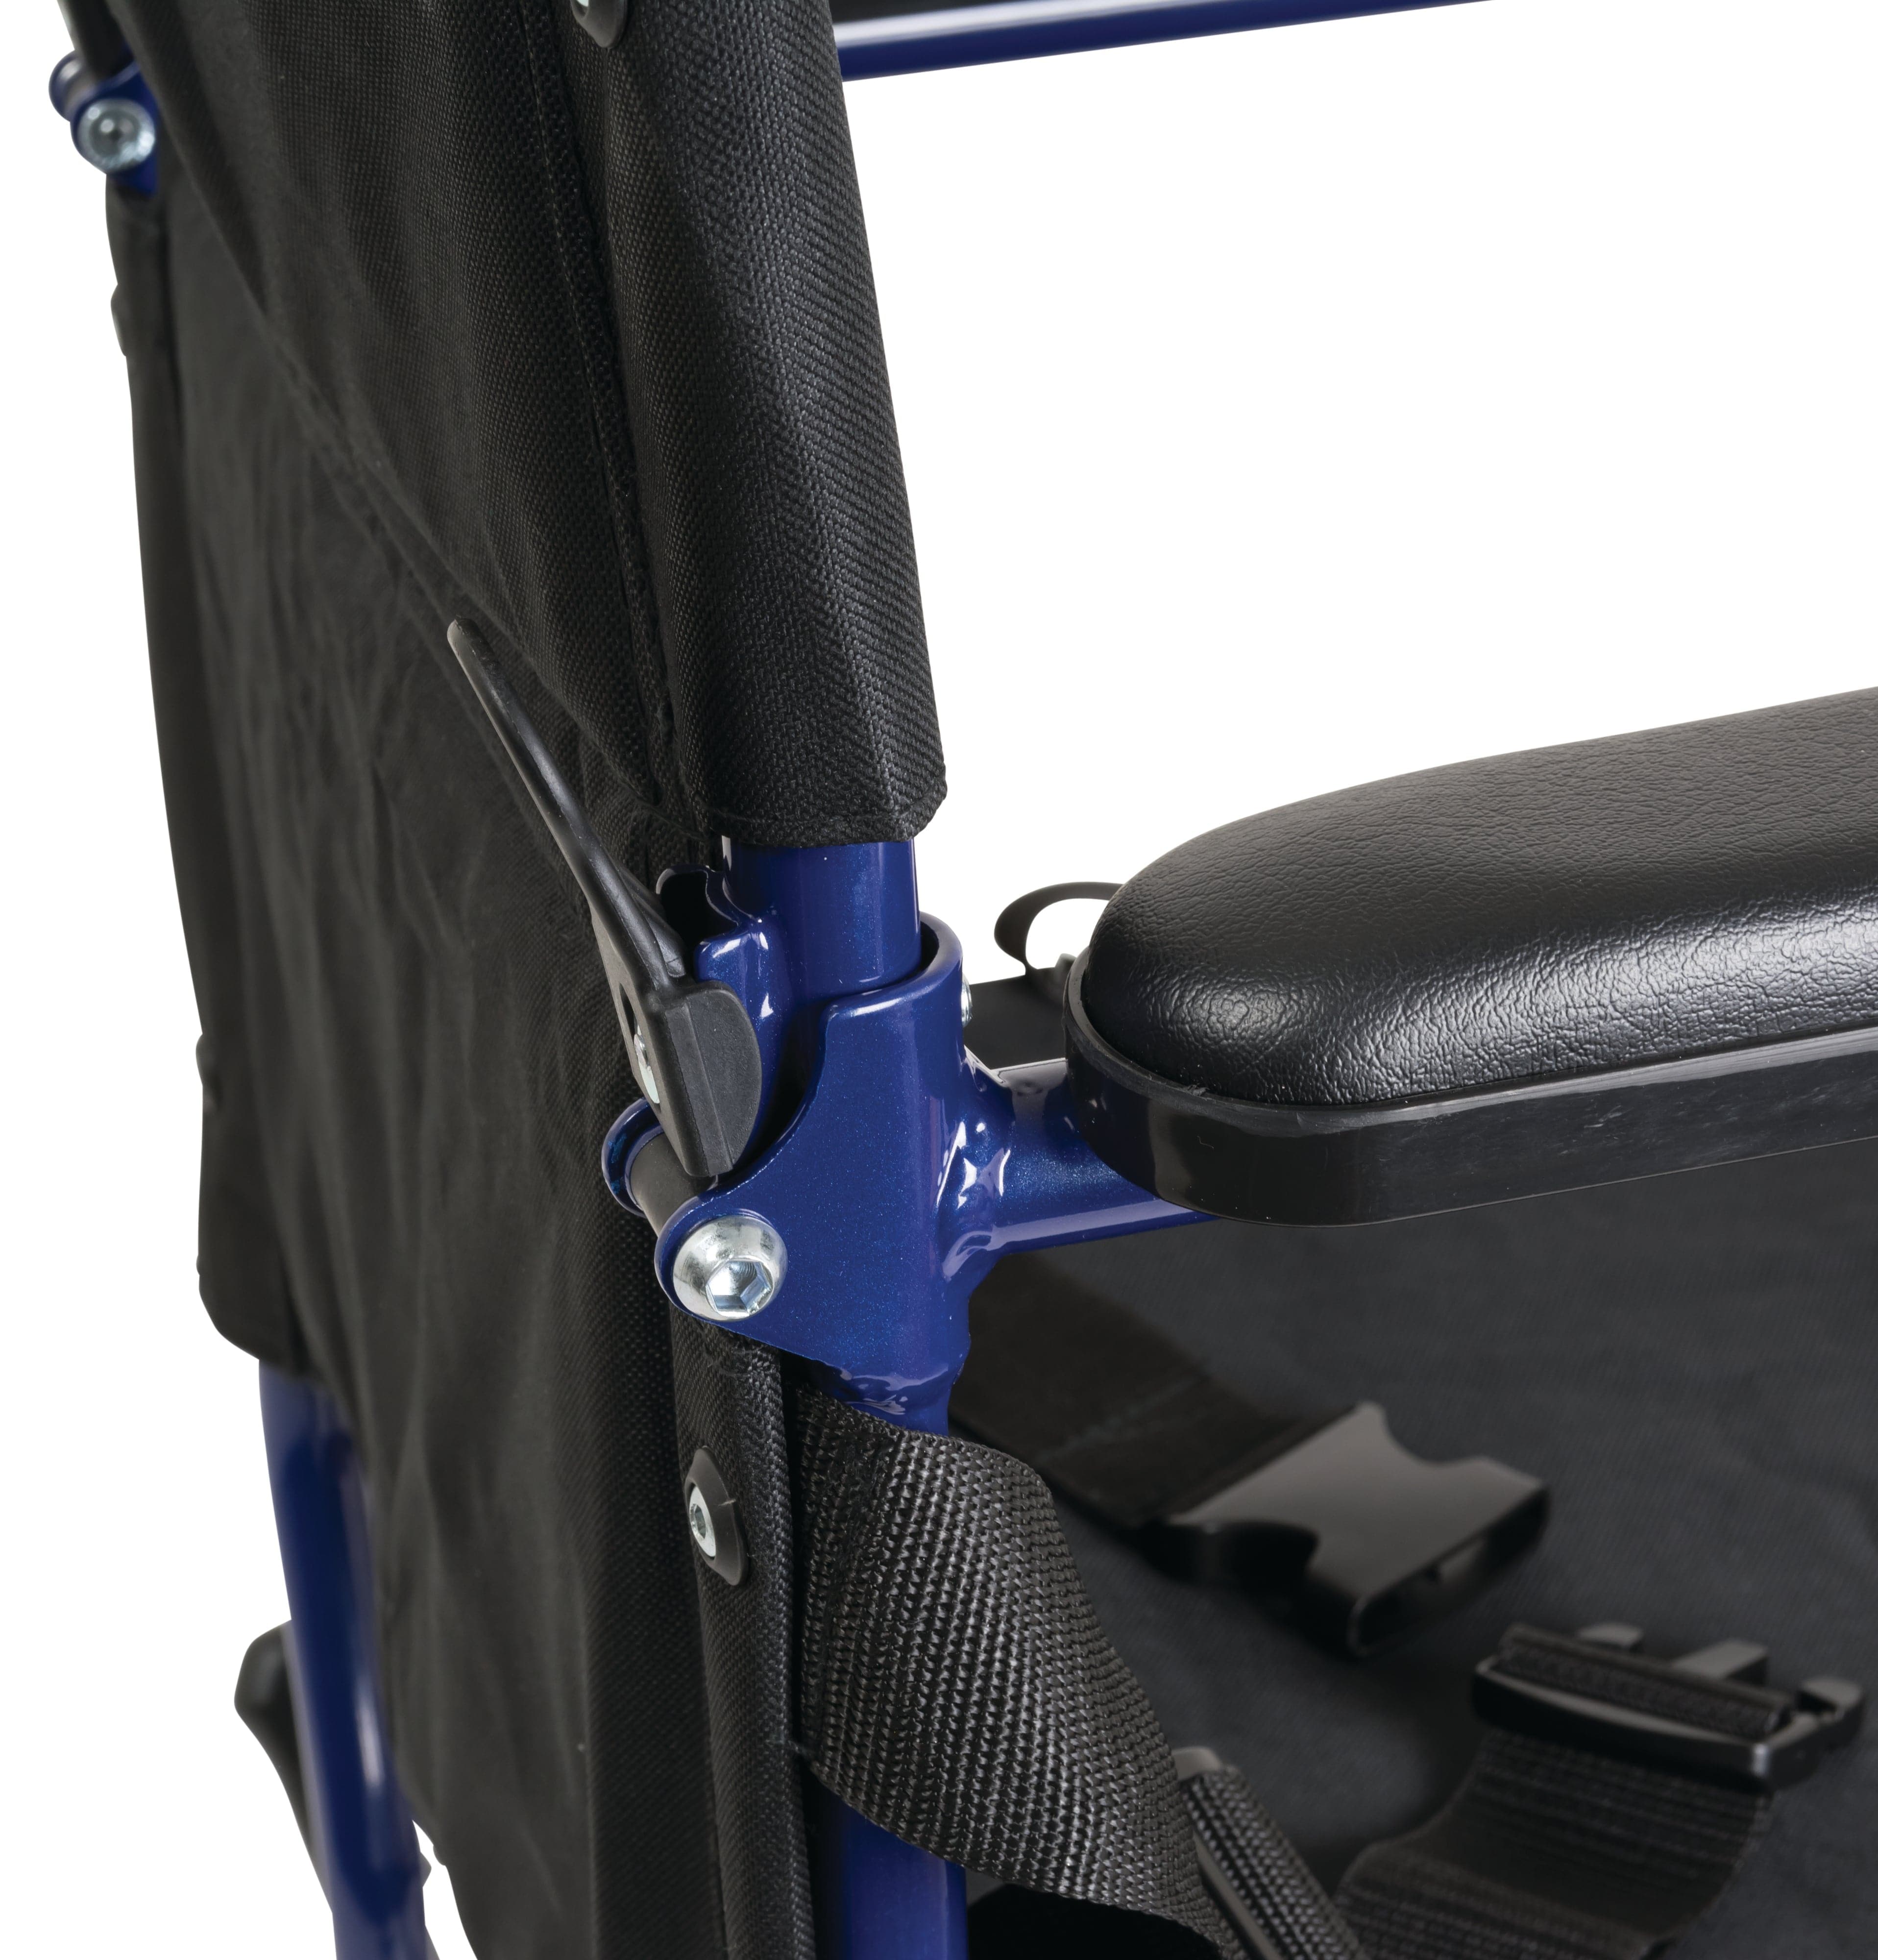 Compass Health ProBasics Wheelchairs Compass Health ProBasics Aluminum Transport Wheelchair, 19-inch, Blue